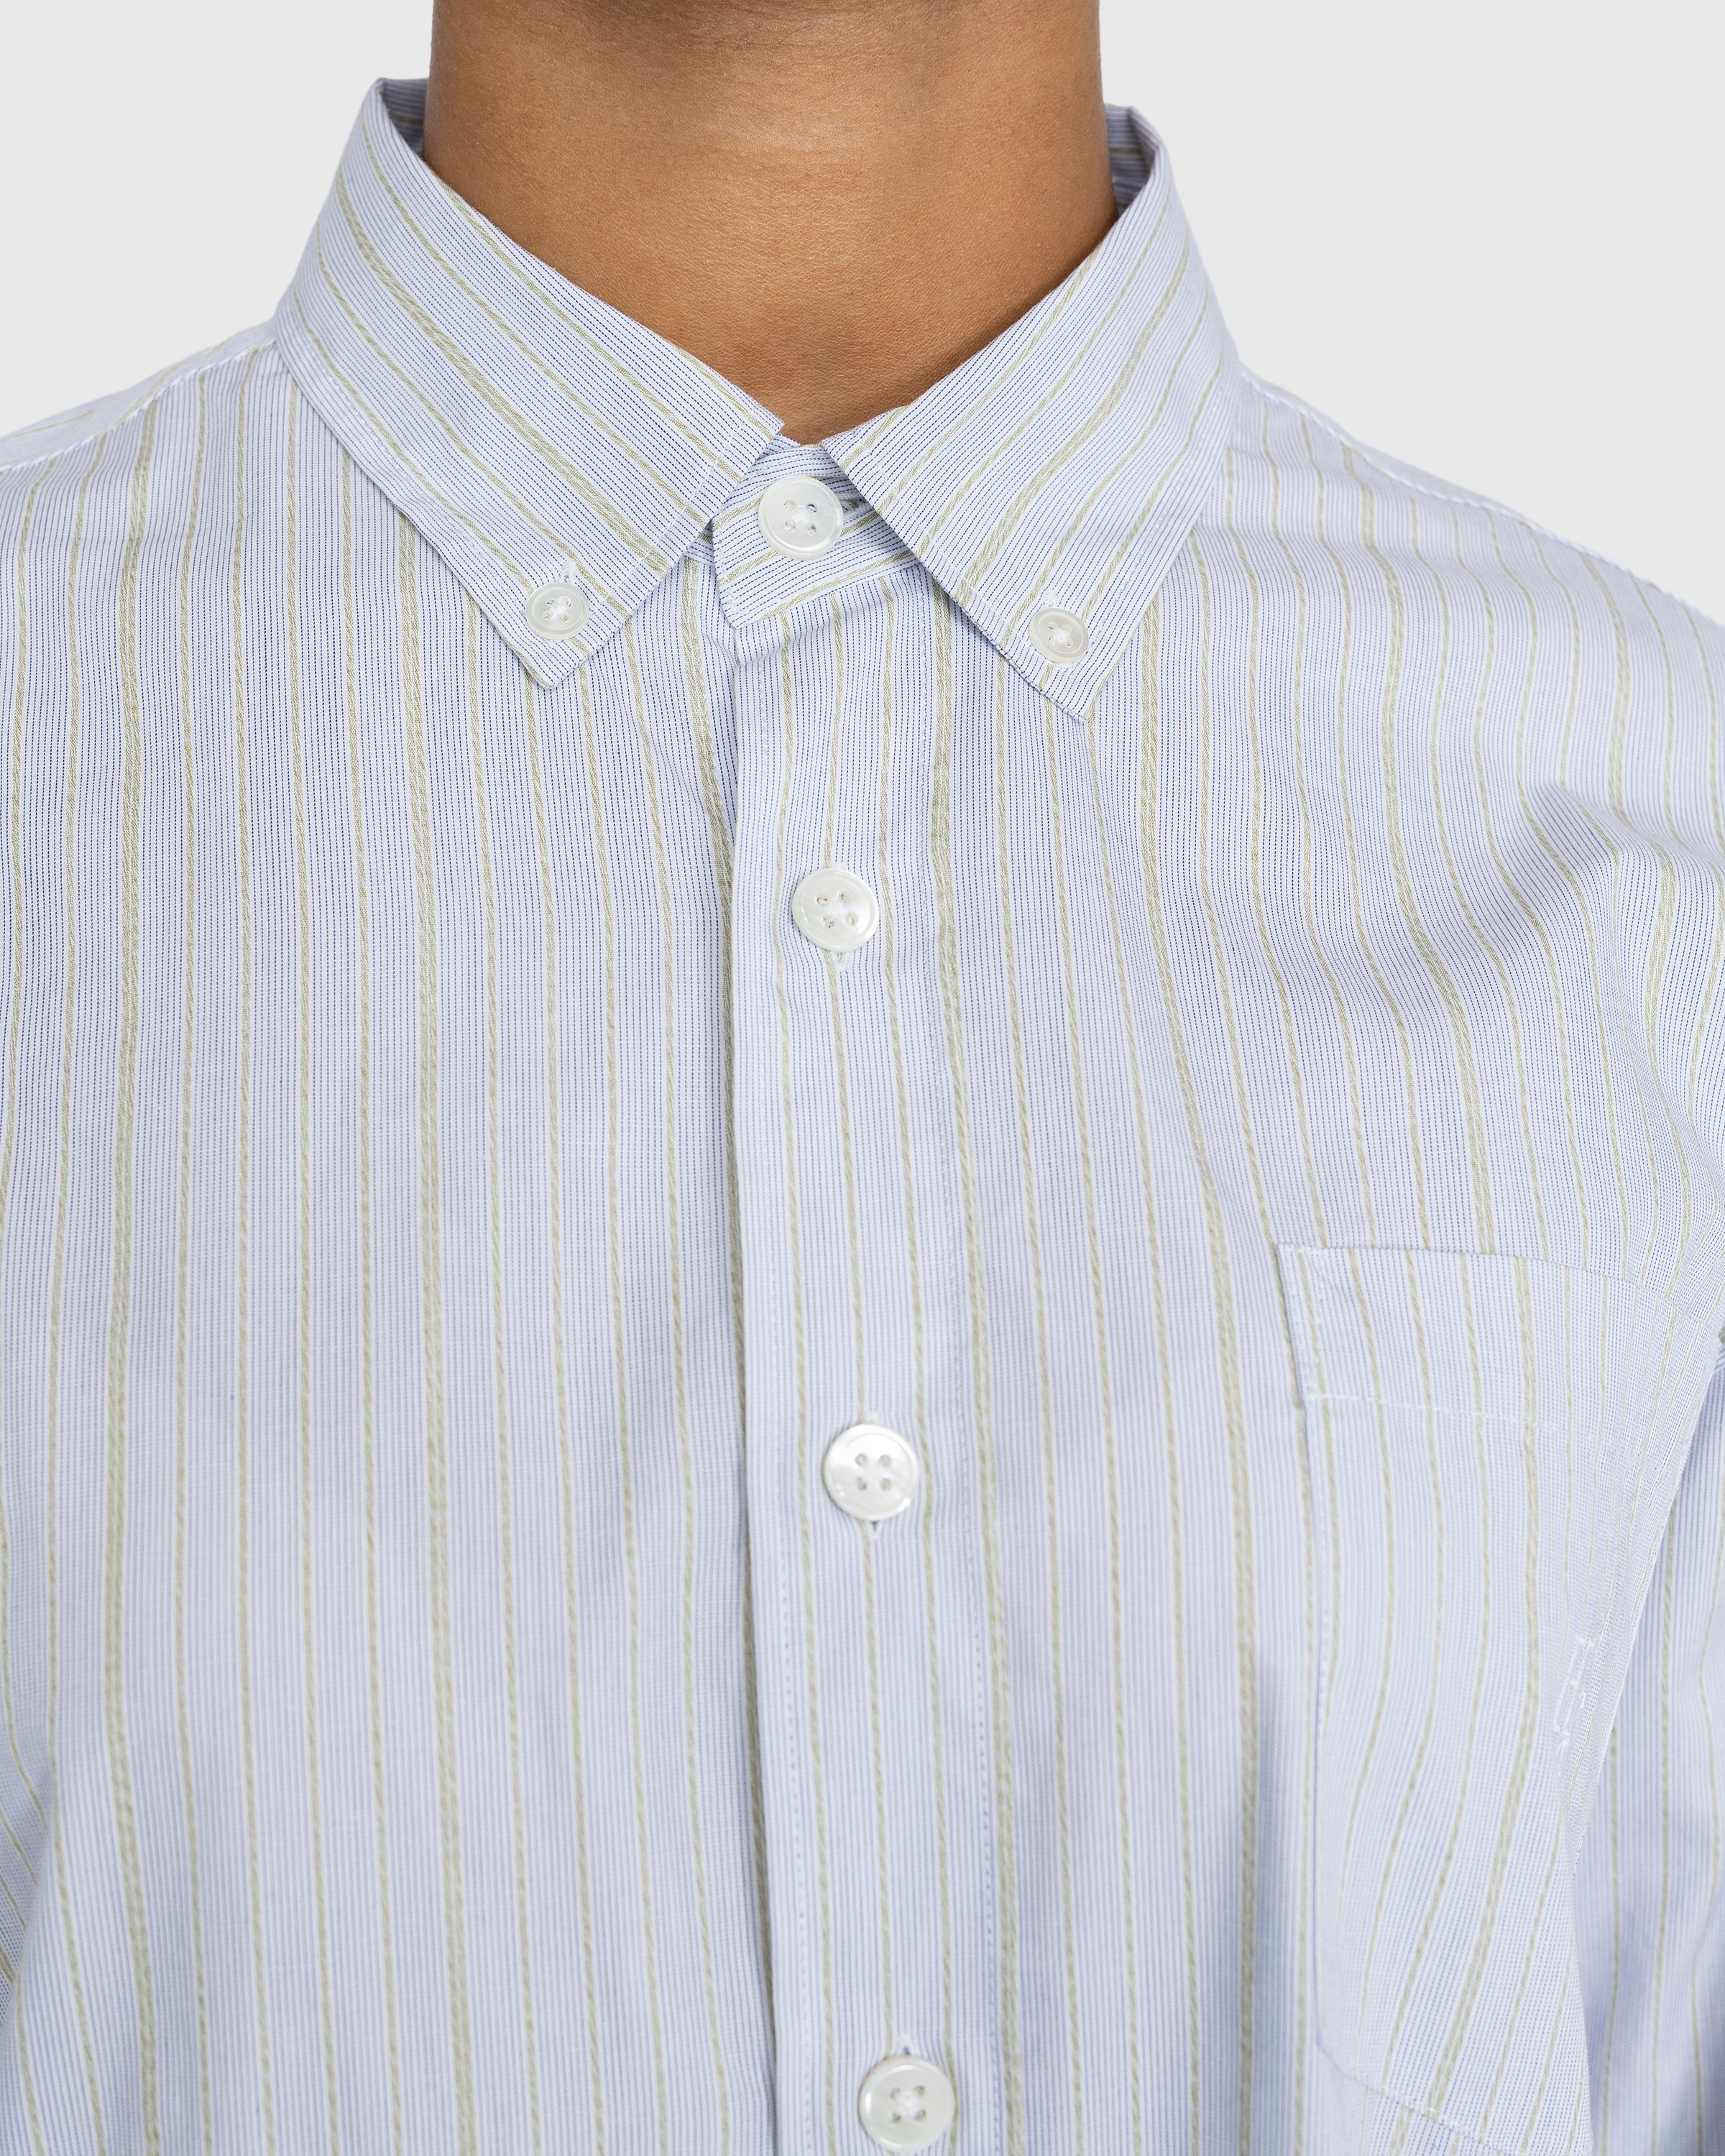 Highsnobiety - Striped Dress Shirt White/Blue - Clothing - Blue - Image 5